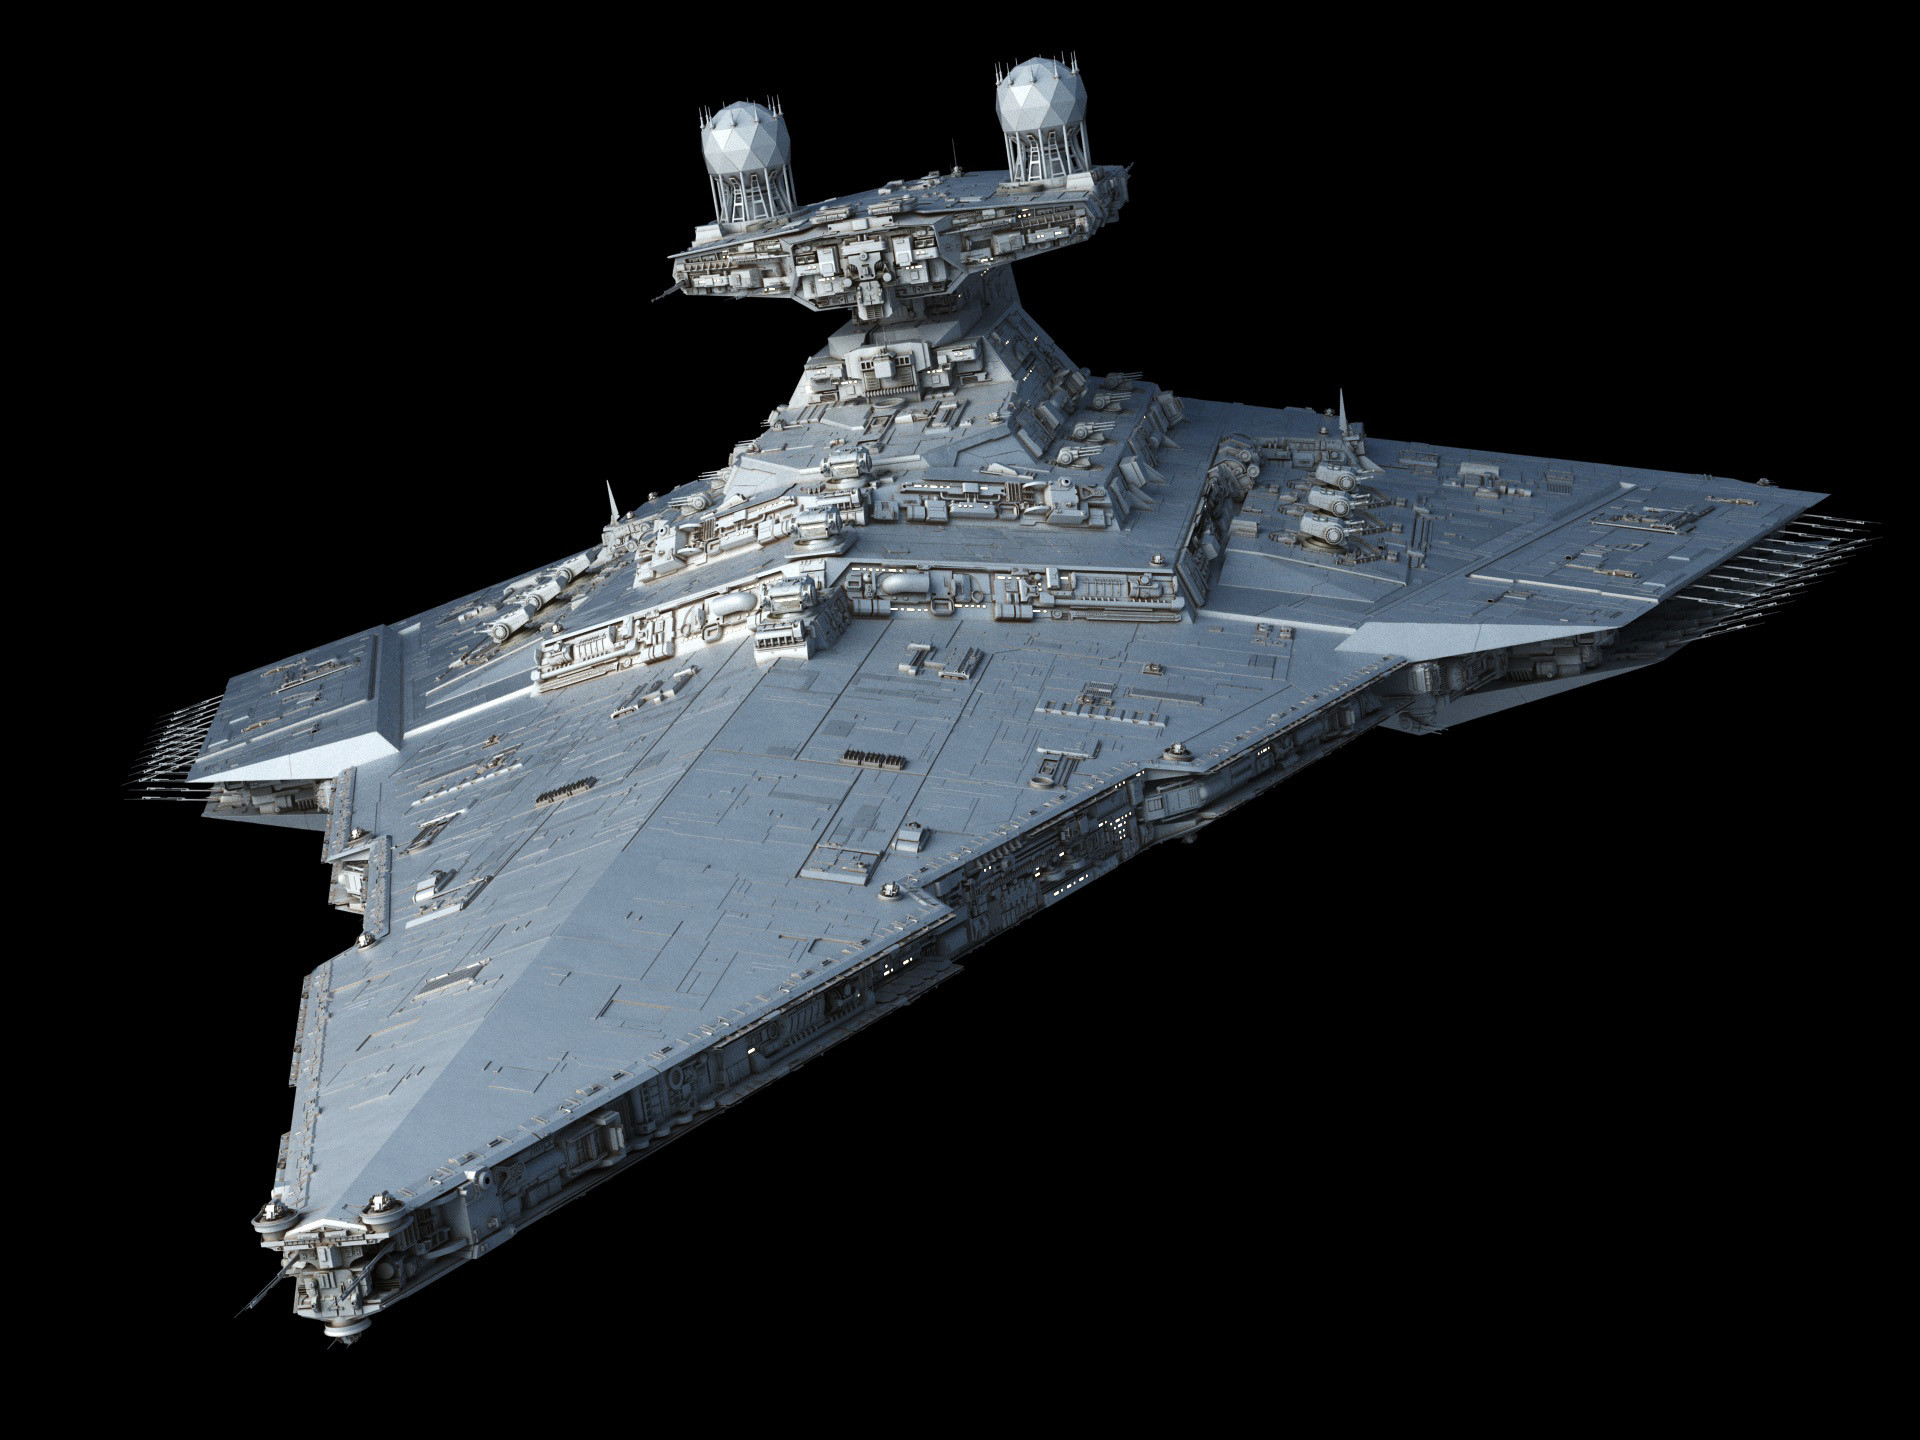 General 1920x1440 Star Wars Star Destroyer science fiction spaceship Imperial Forces CGI Star Wars Ships digital art fractalsponge